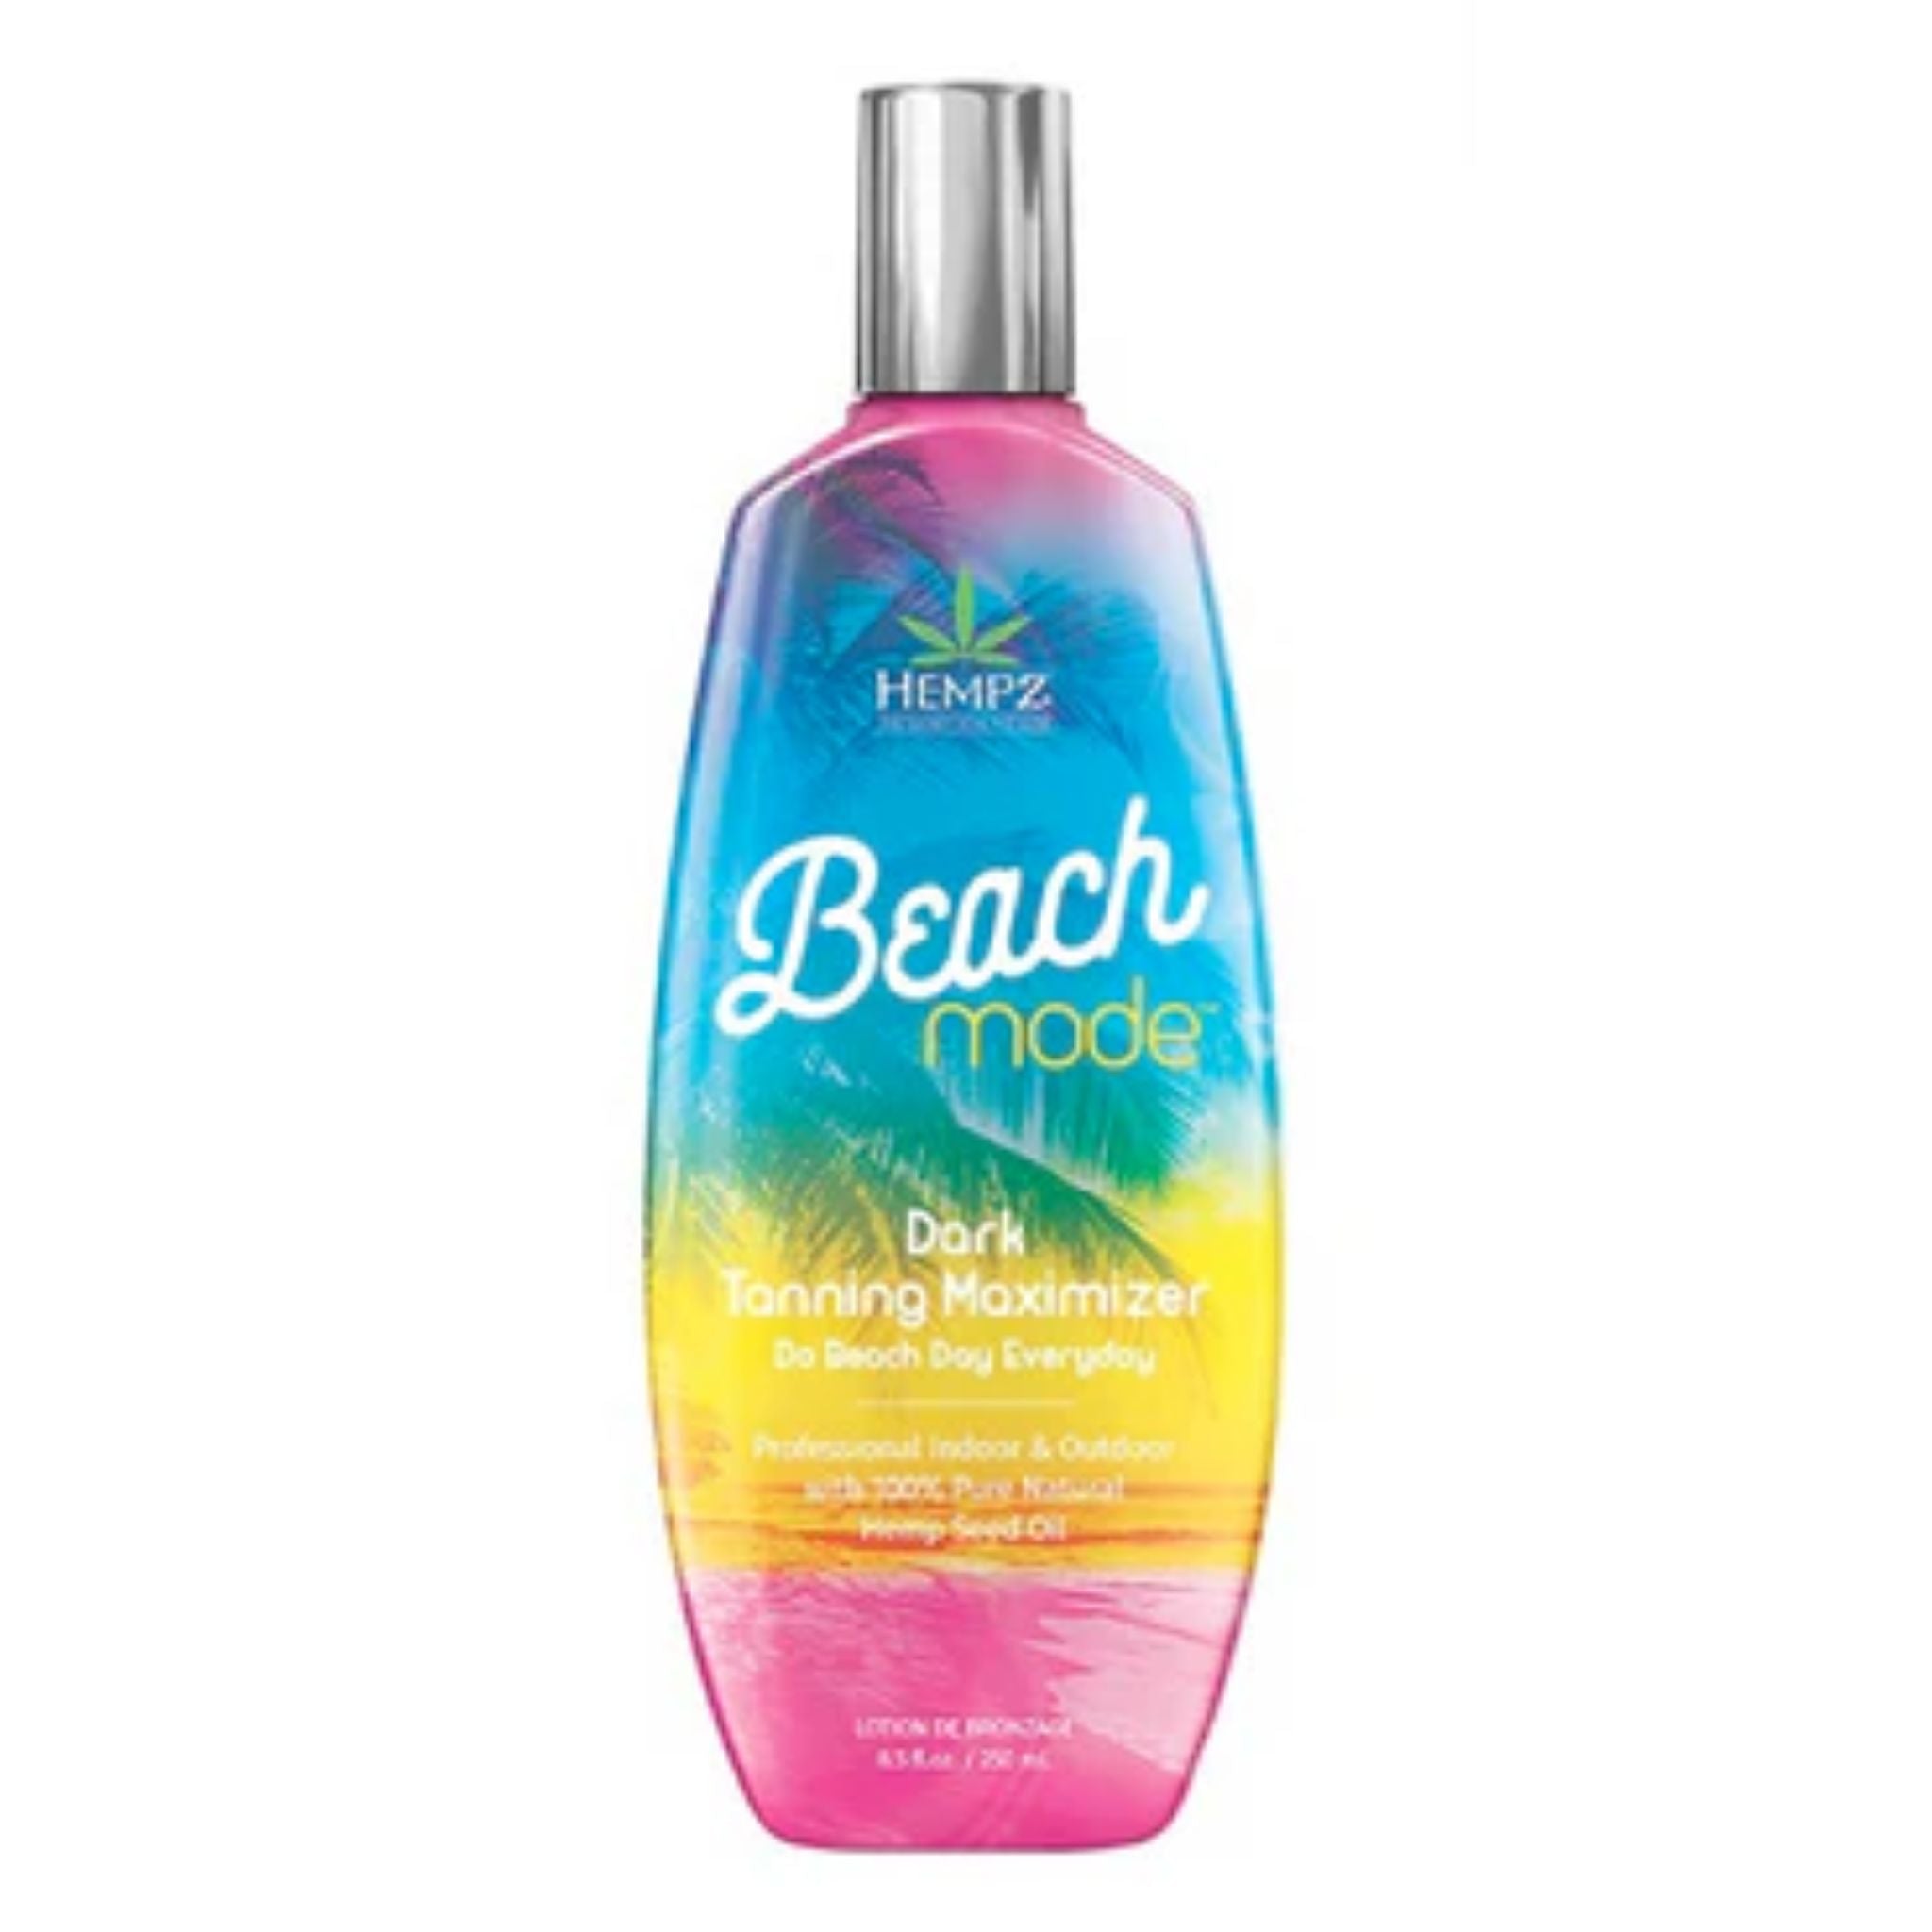 Hempz Beach Mode Dark Tanning Maximizer Bottle